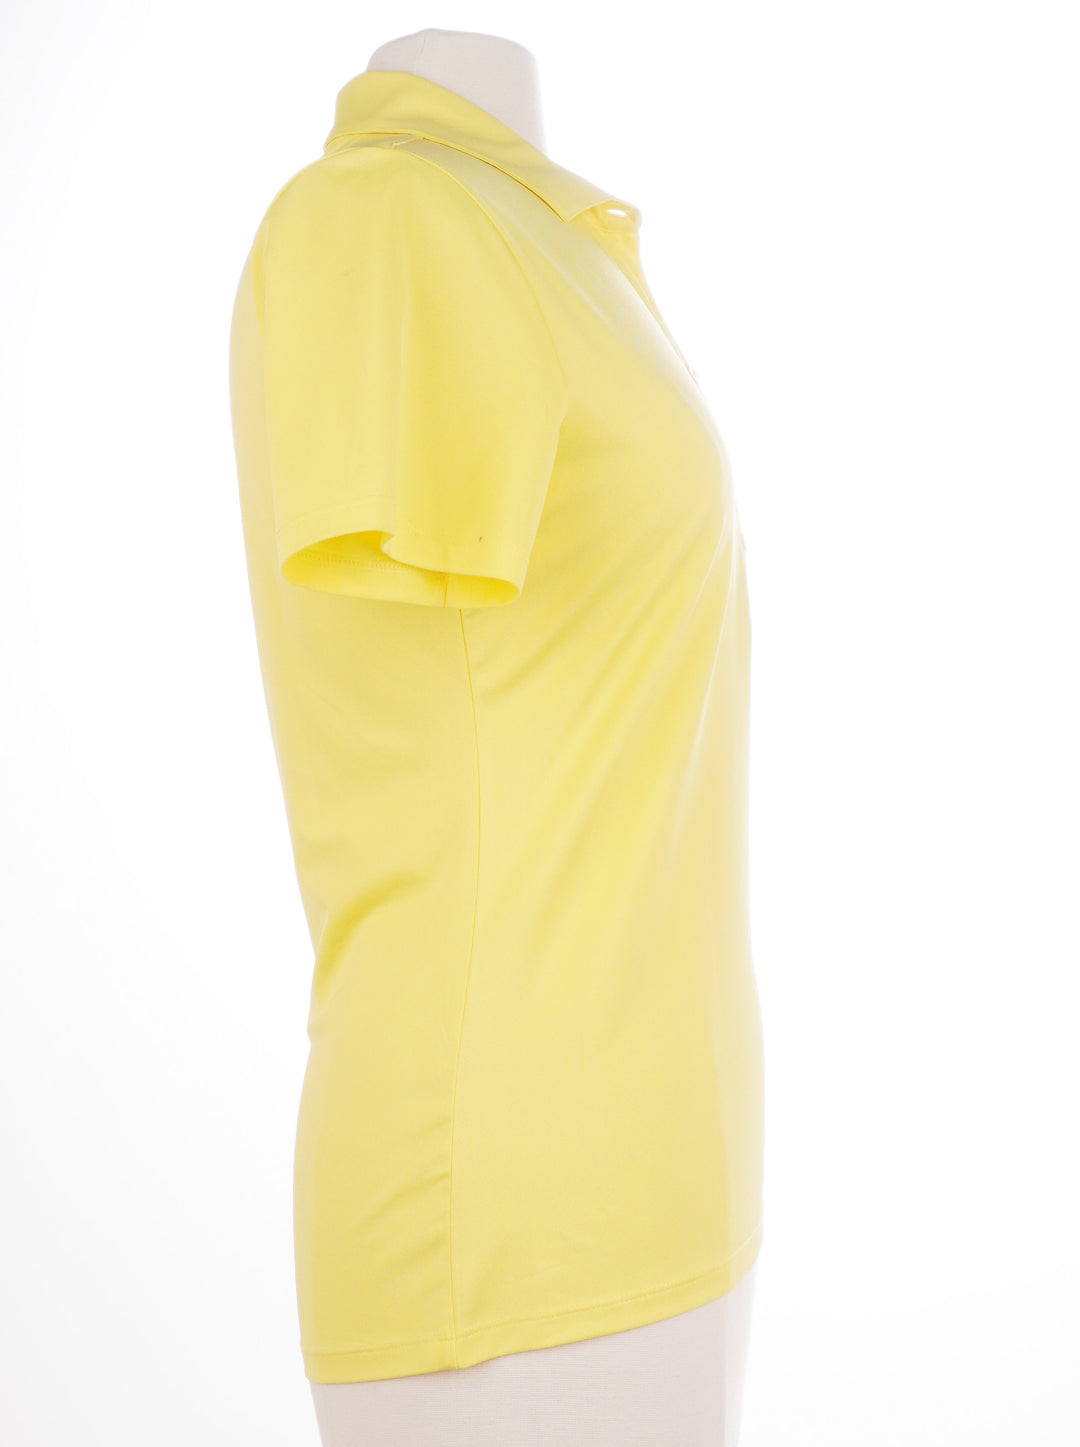 Greg Norman Freedom Short Sleeve Polo - Sunbright - Size Medium - Skorzie